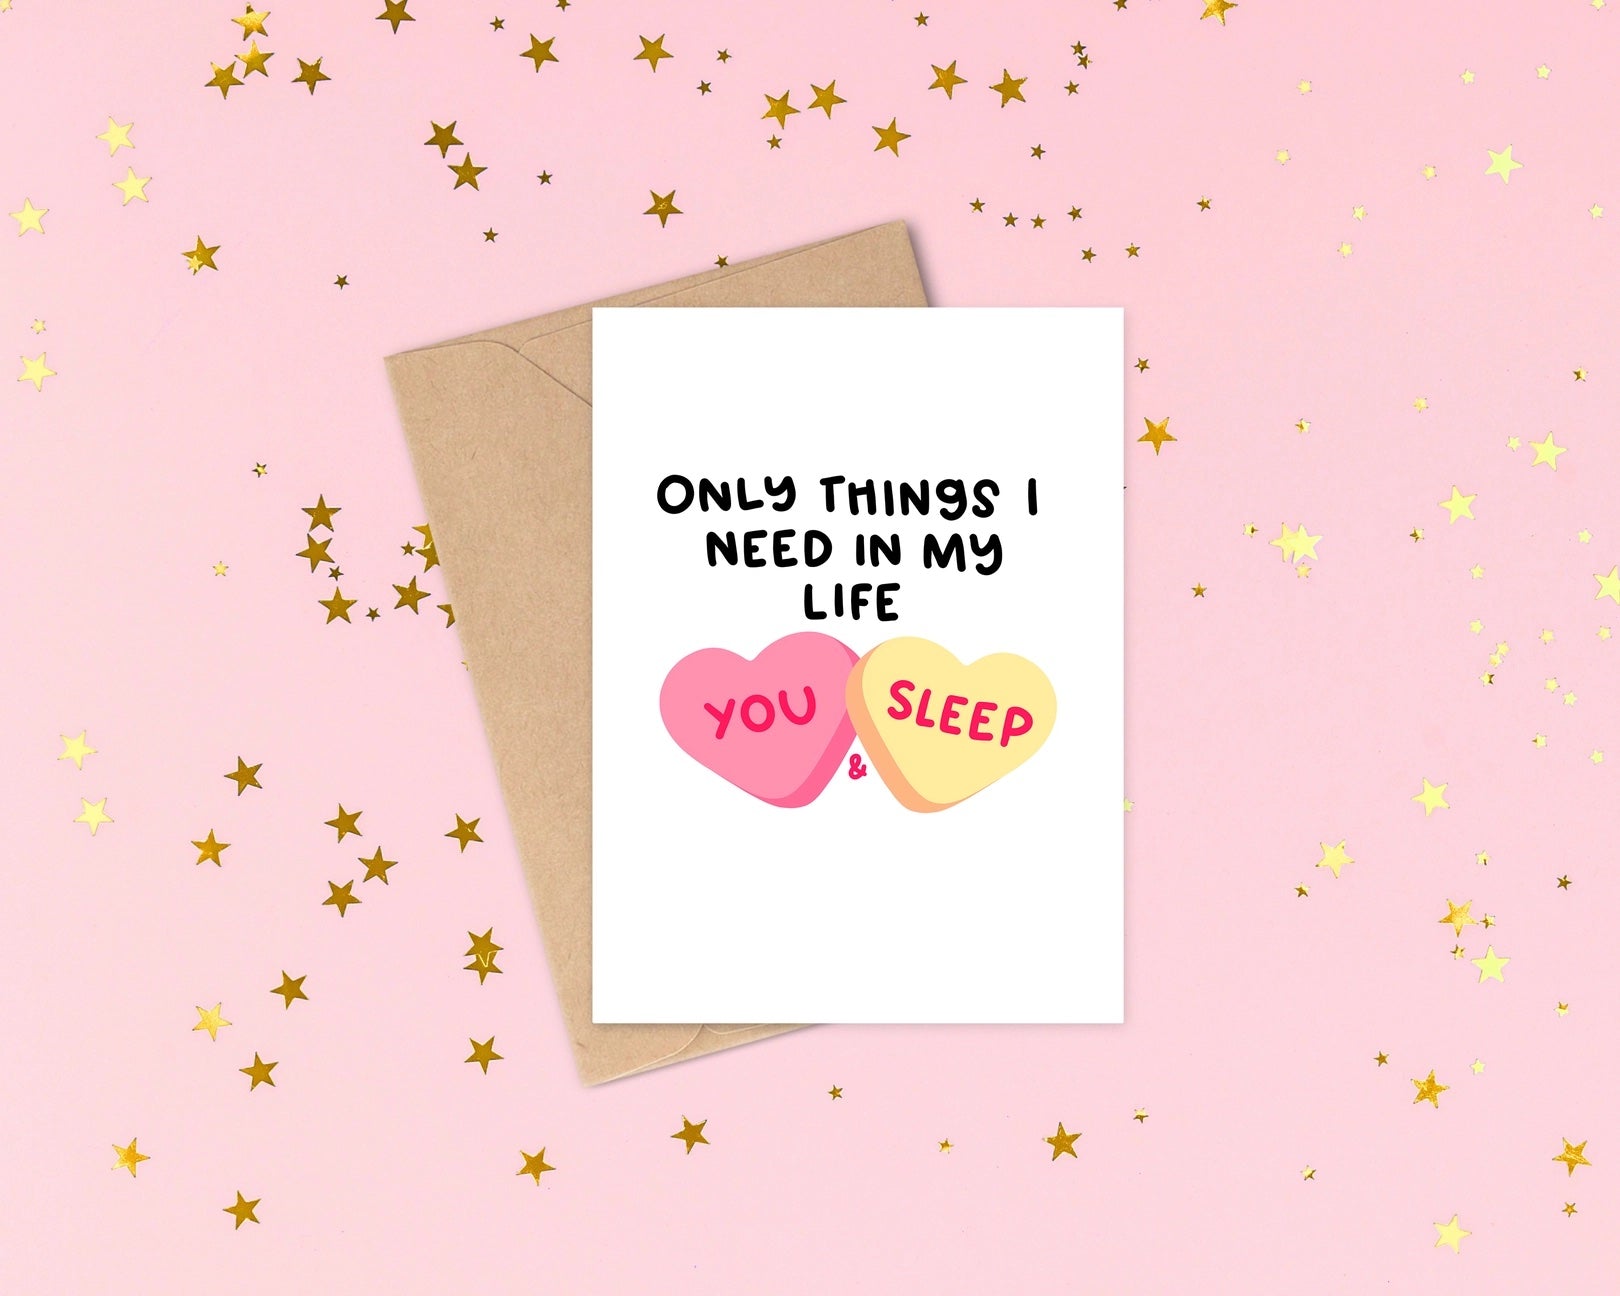 You & Sleep Valentine's Day Greeting Card